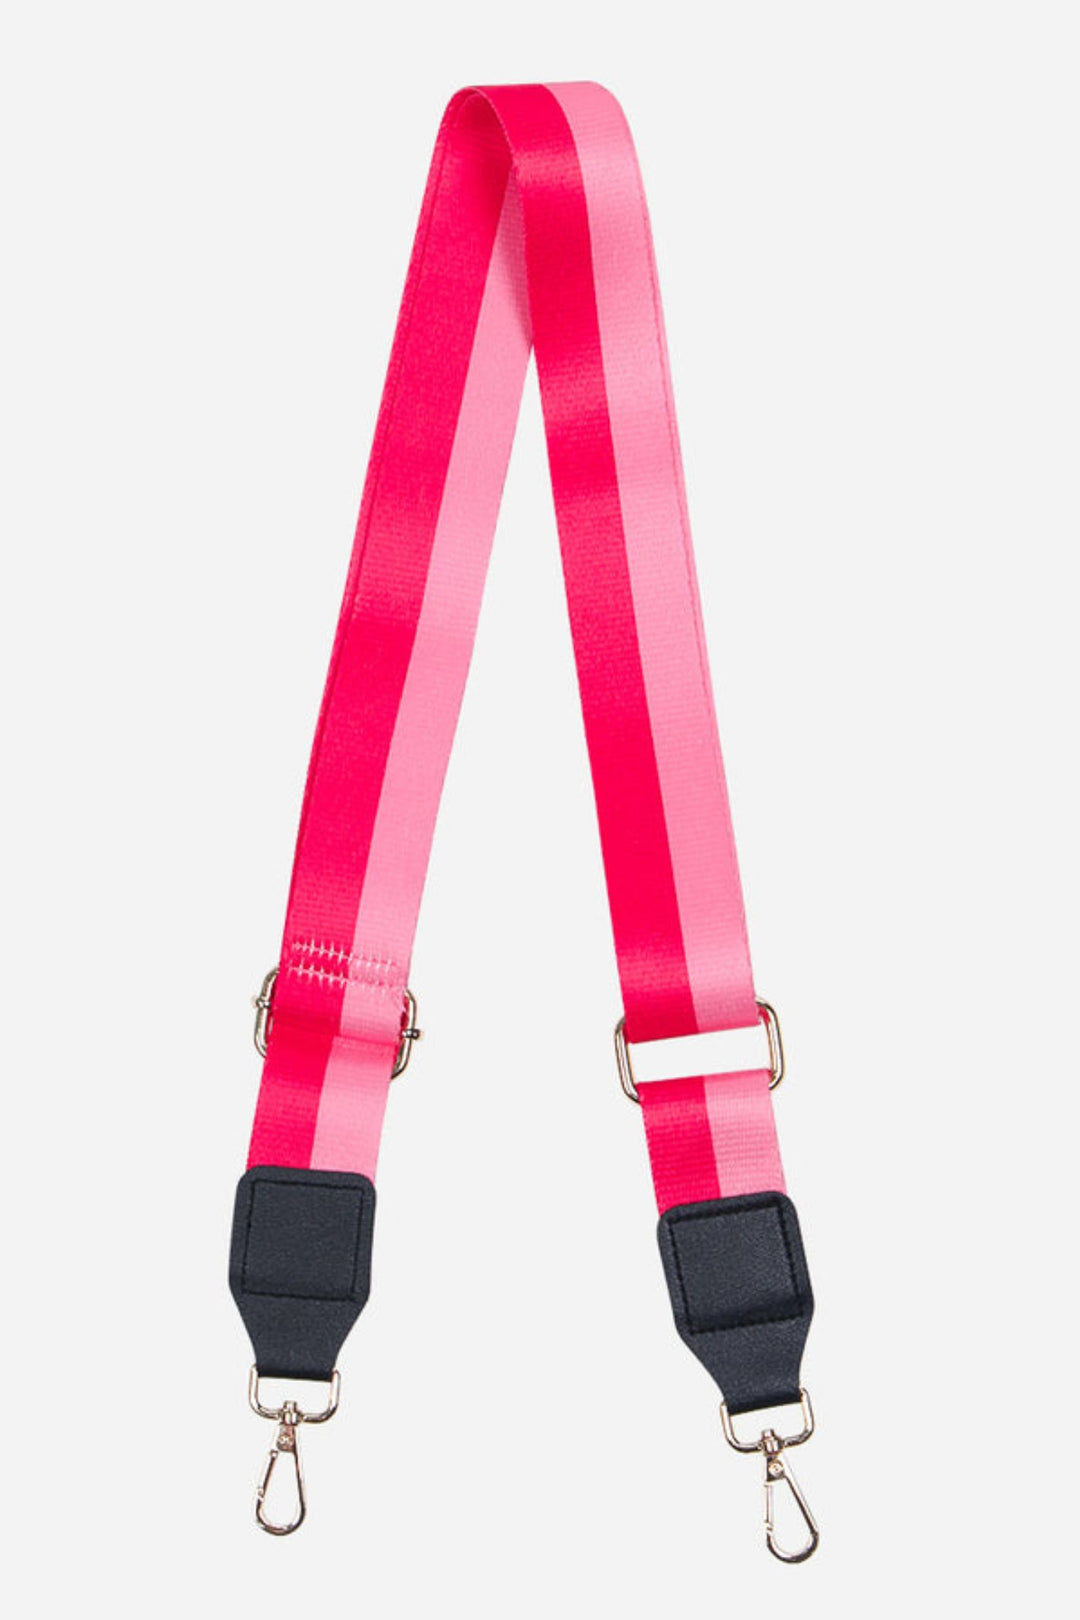 2 Stripe Print Interchangeable Bag Strap Pink - Sugarplum Boutique